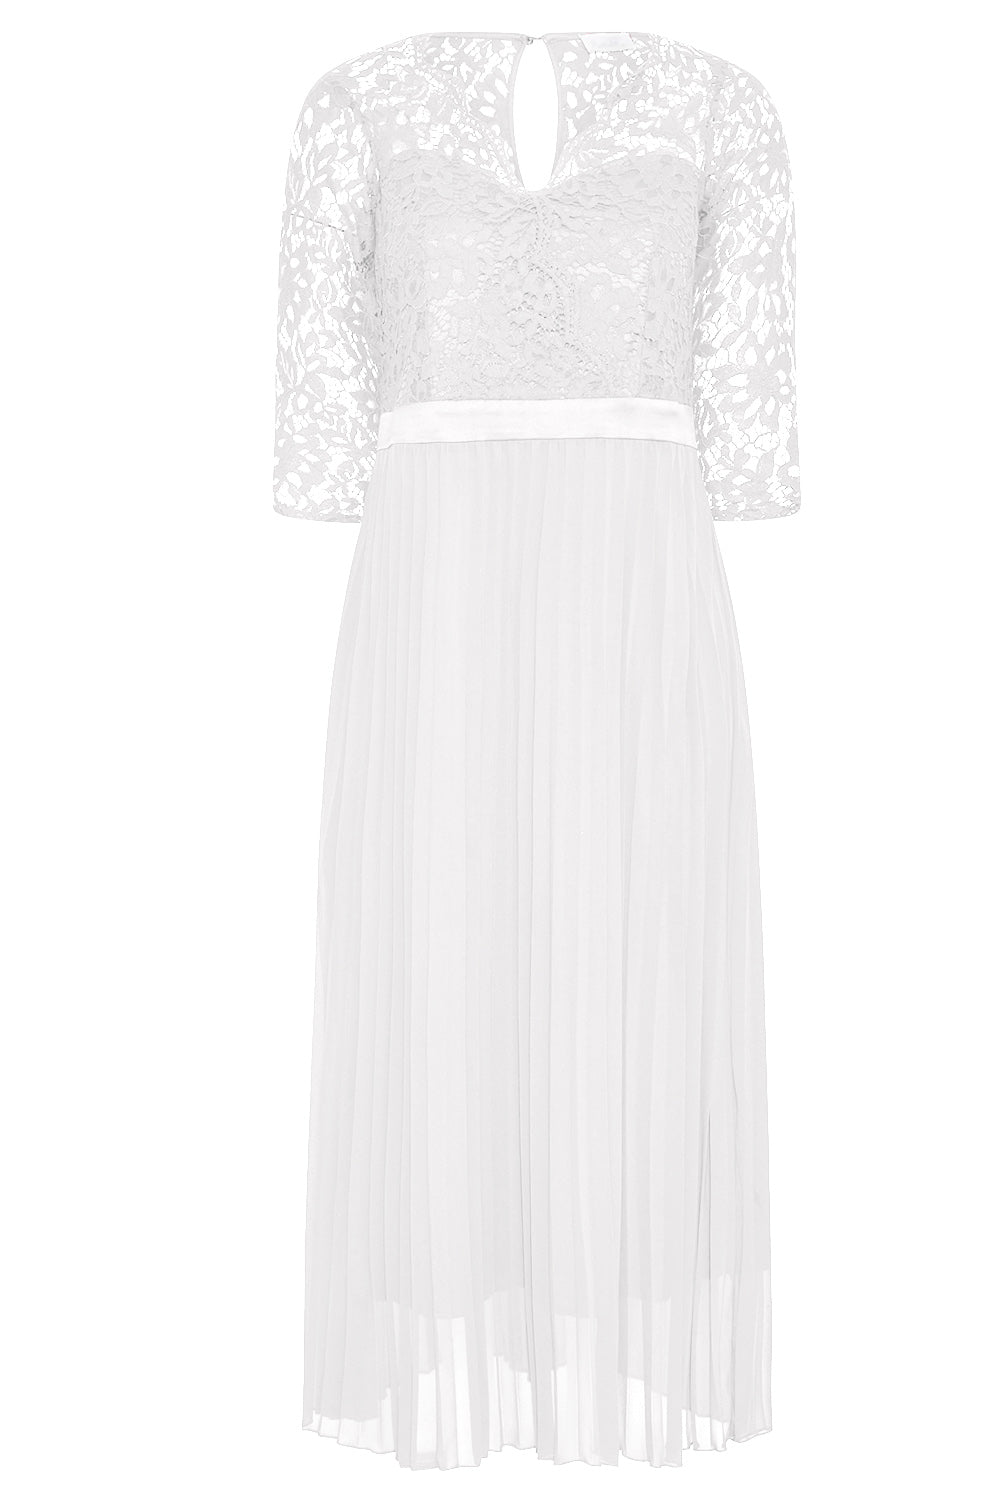 White Lace Scalloped V Neck 3/4 Sleeves Pleated Tulle Plus Maxi Dress Plus Size Dresses JT's Designer Fashion